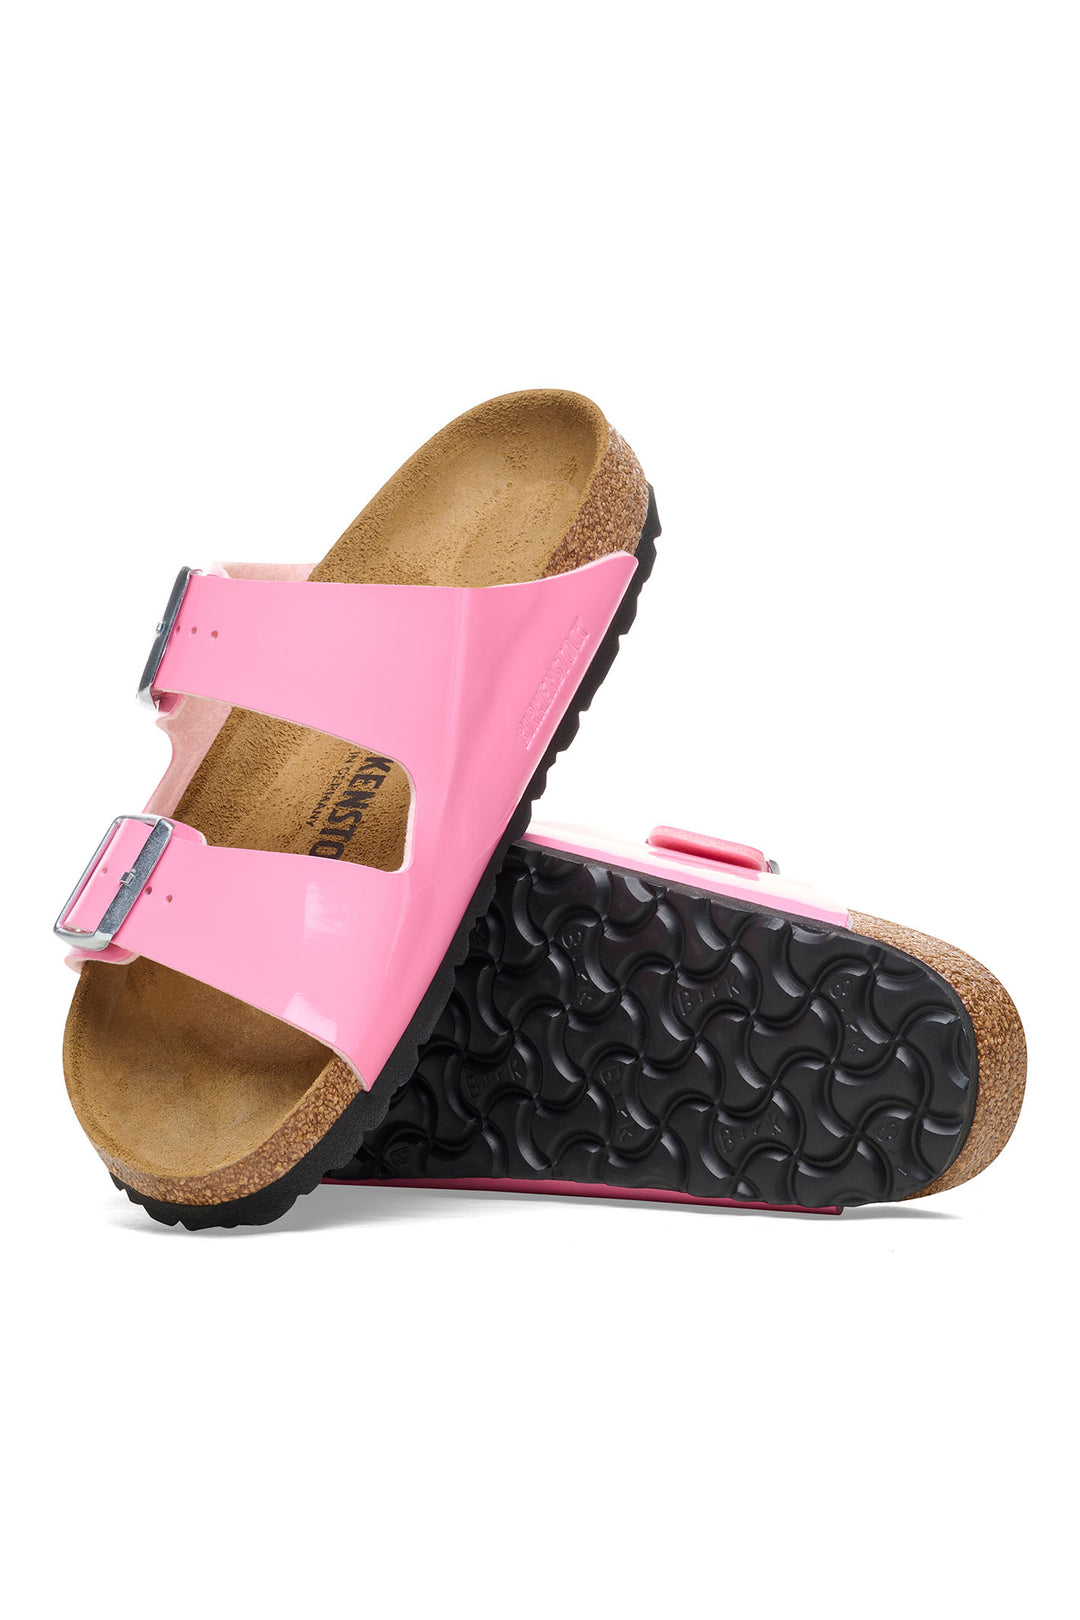 Birkenstock Arizona 1026957 Candy Pink Black Birko-Flor Patent Leather Narrow Fit Sandal - Shirley Allum Boutique